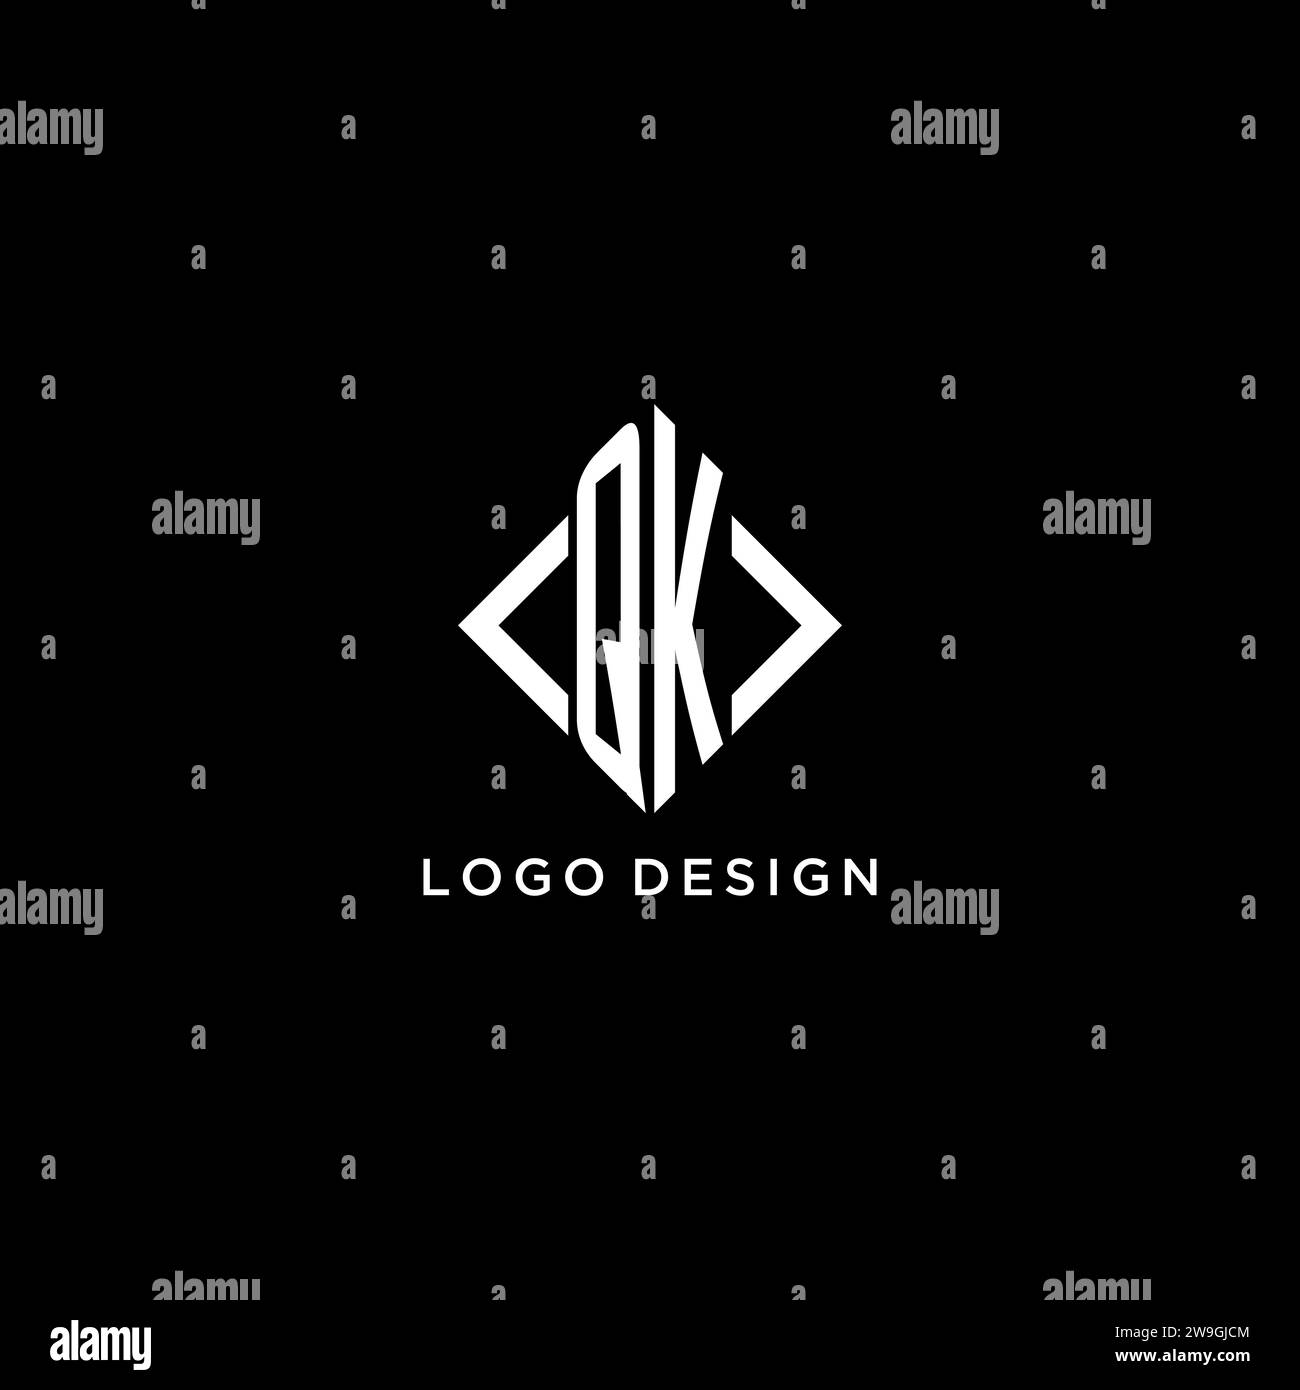 QK initial monogram with rhombus shape logo design ideas Stock Vector